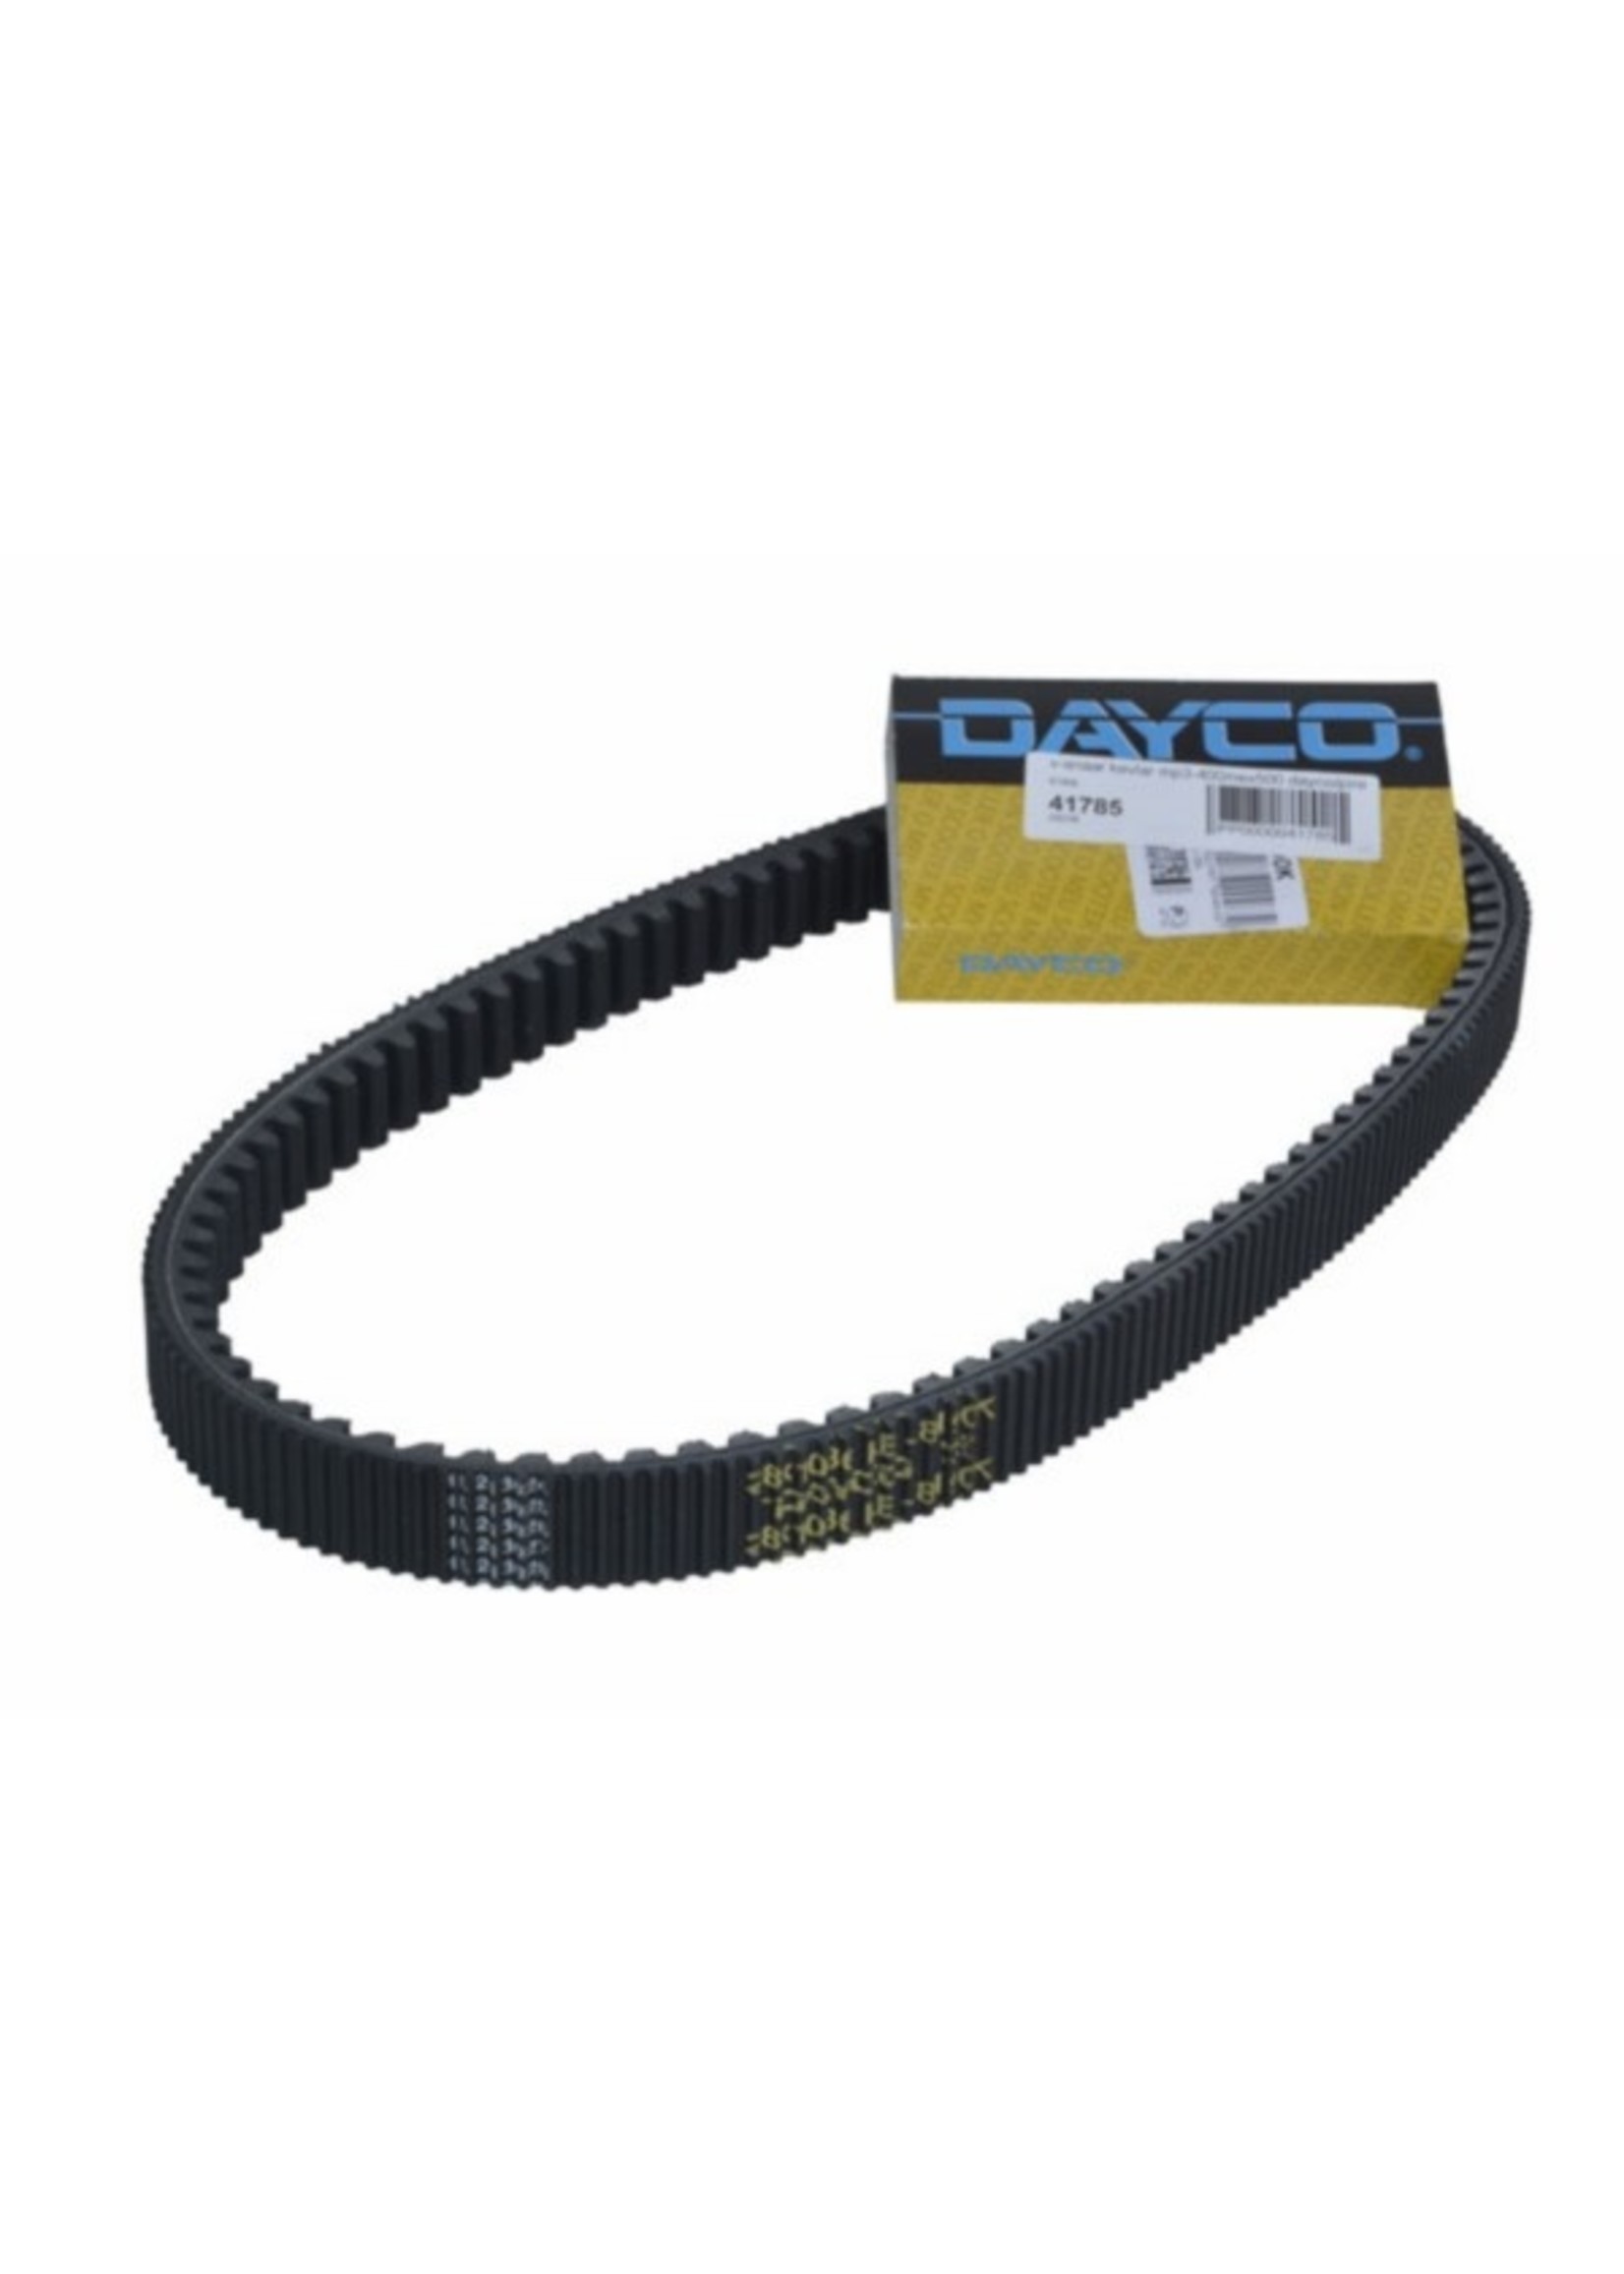 Piaggio v-snaar kevlar mp3-400/nex500 dayco/pirelli 8190k